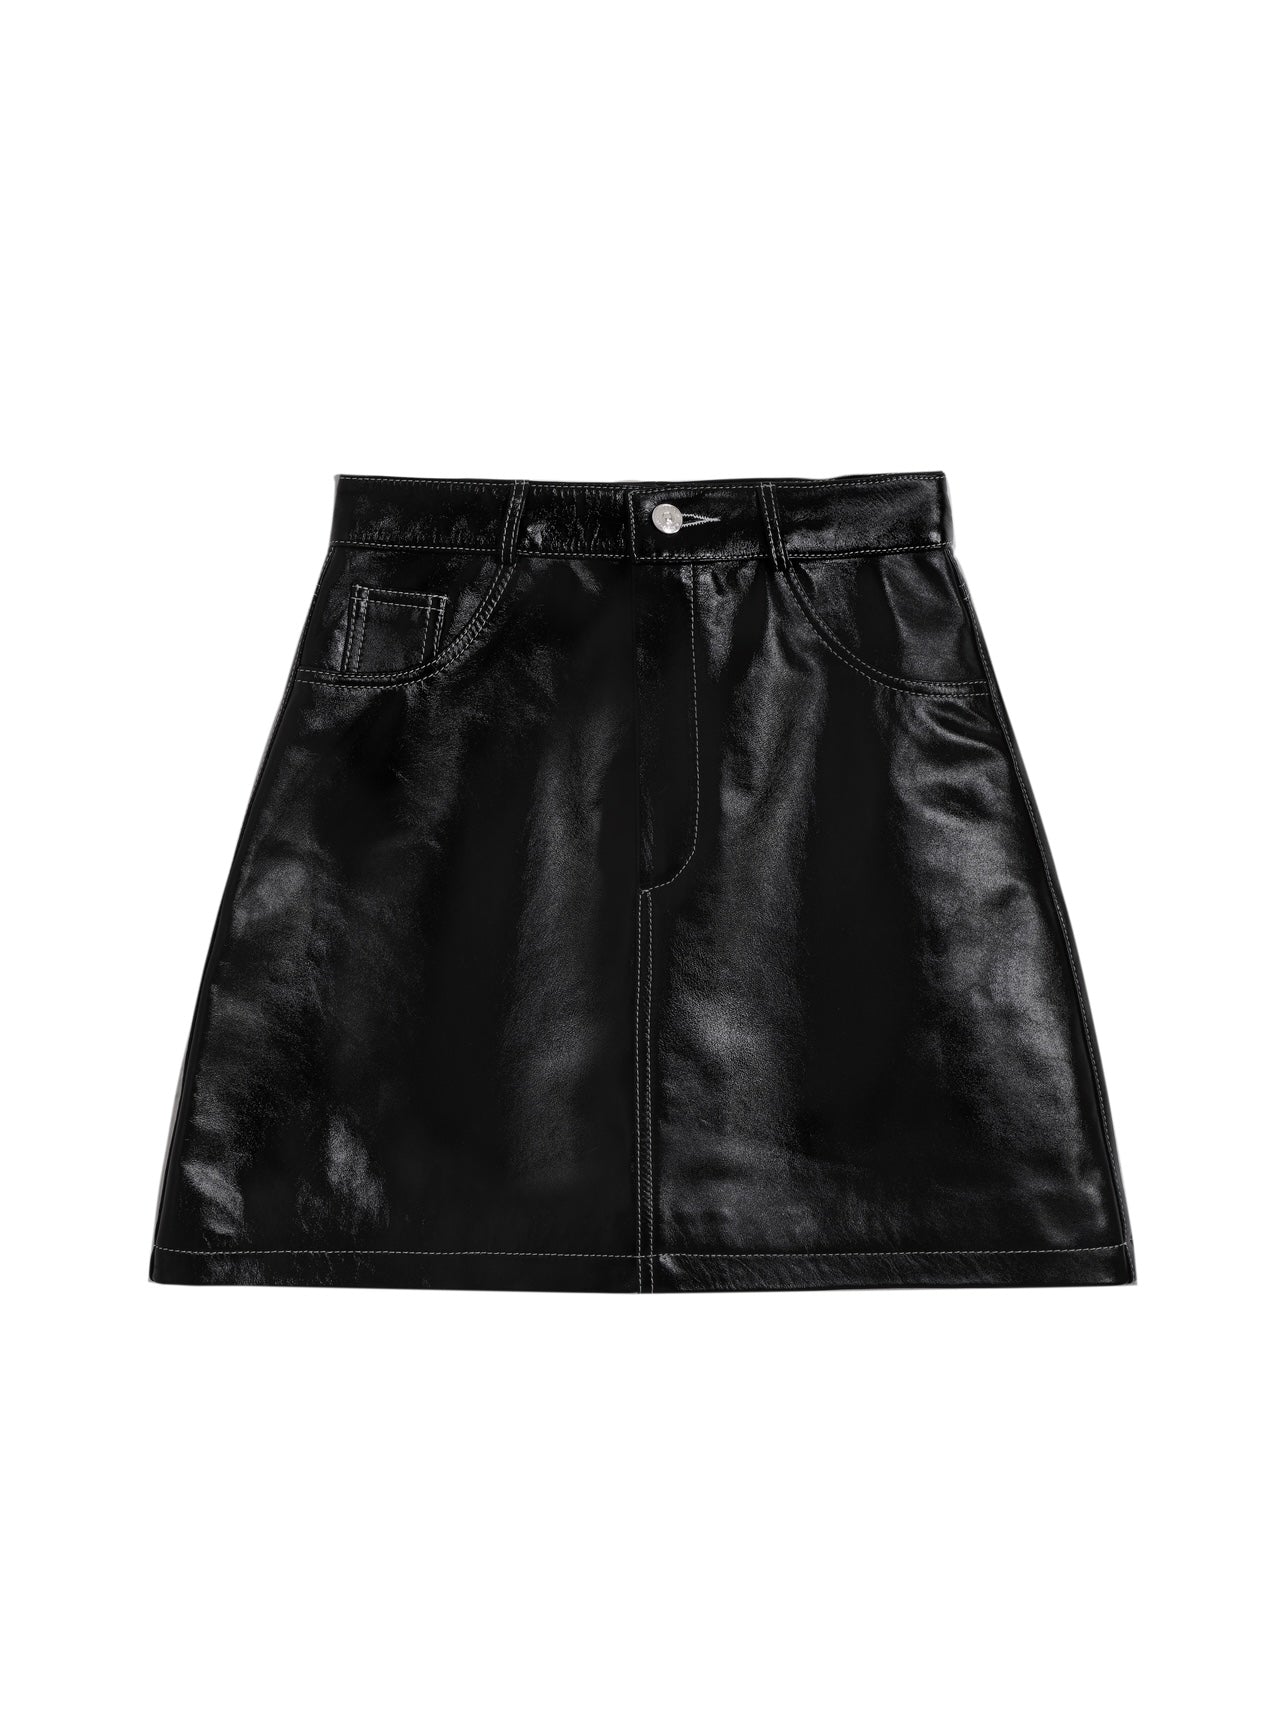 Hishka leather skirt